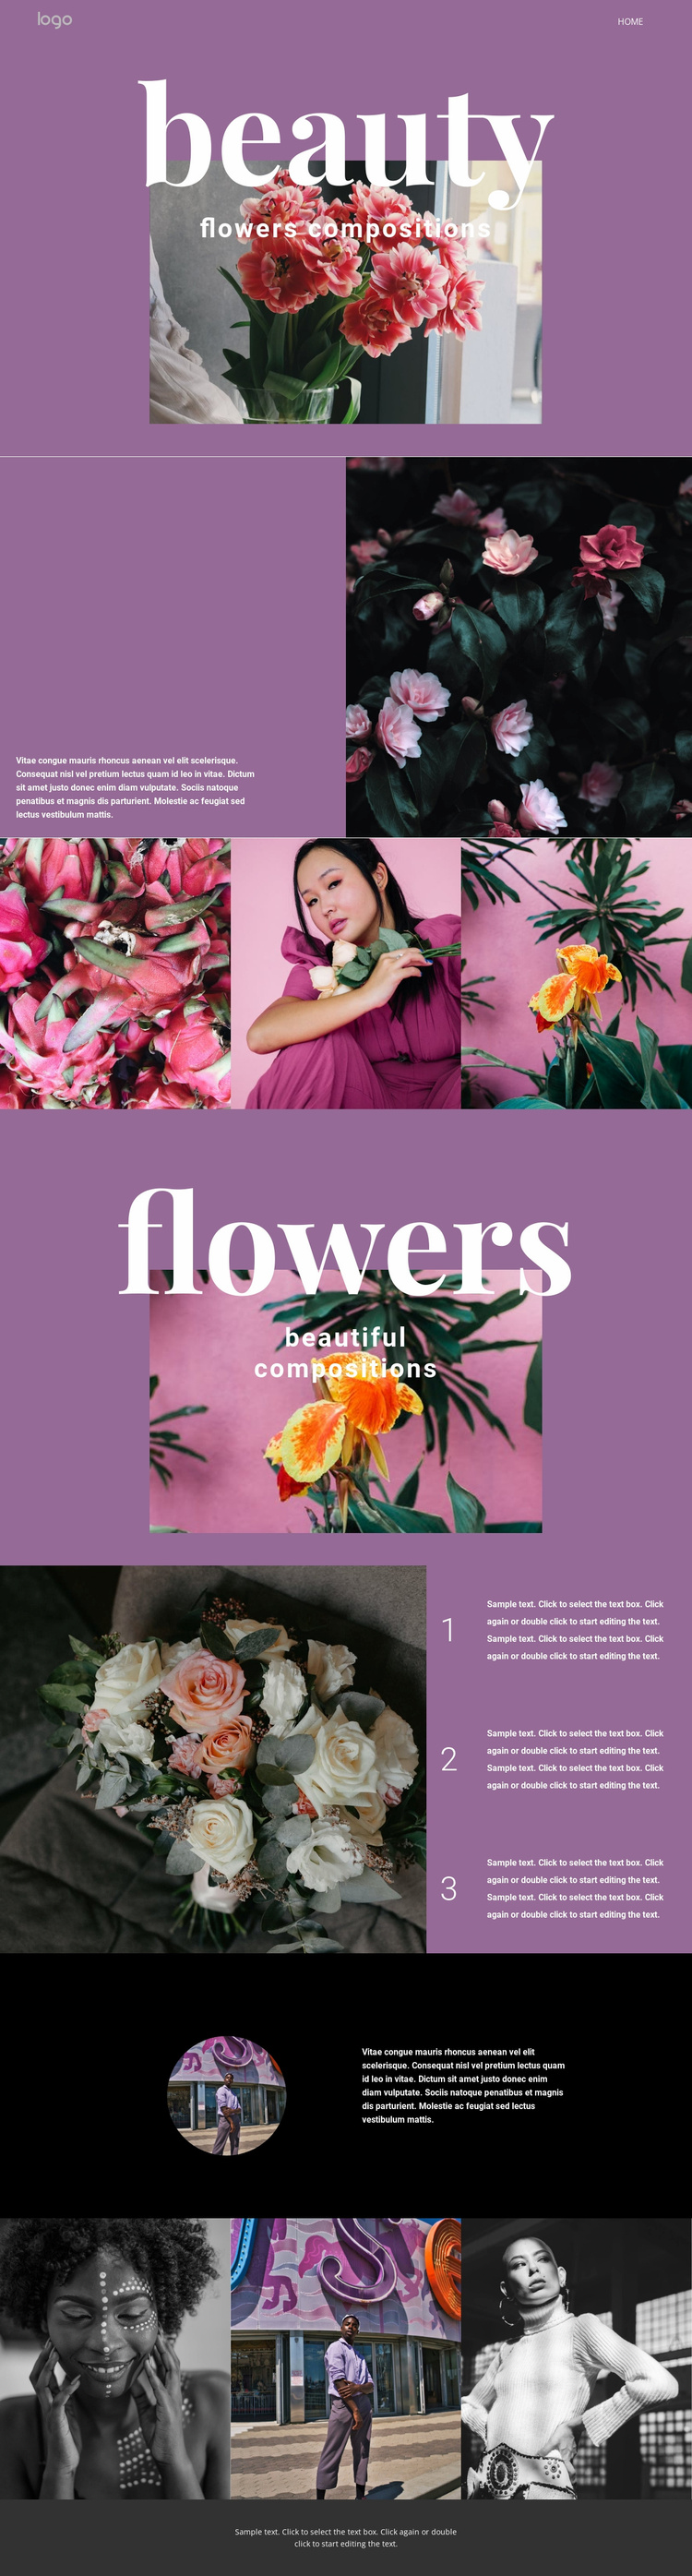 Flower salon Landing Page